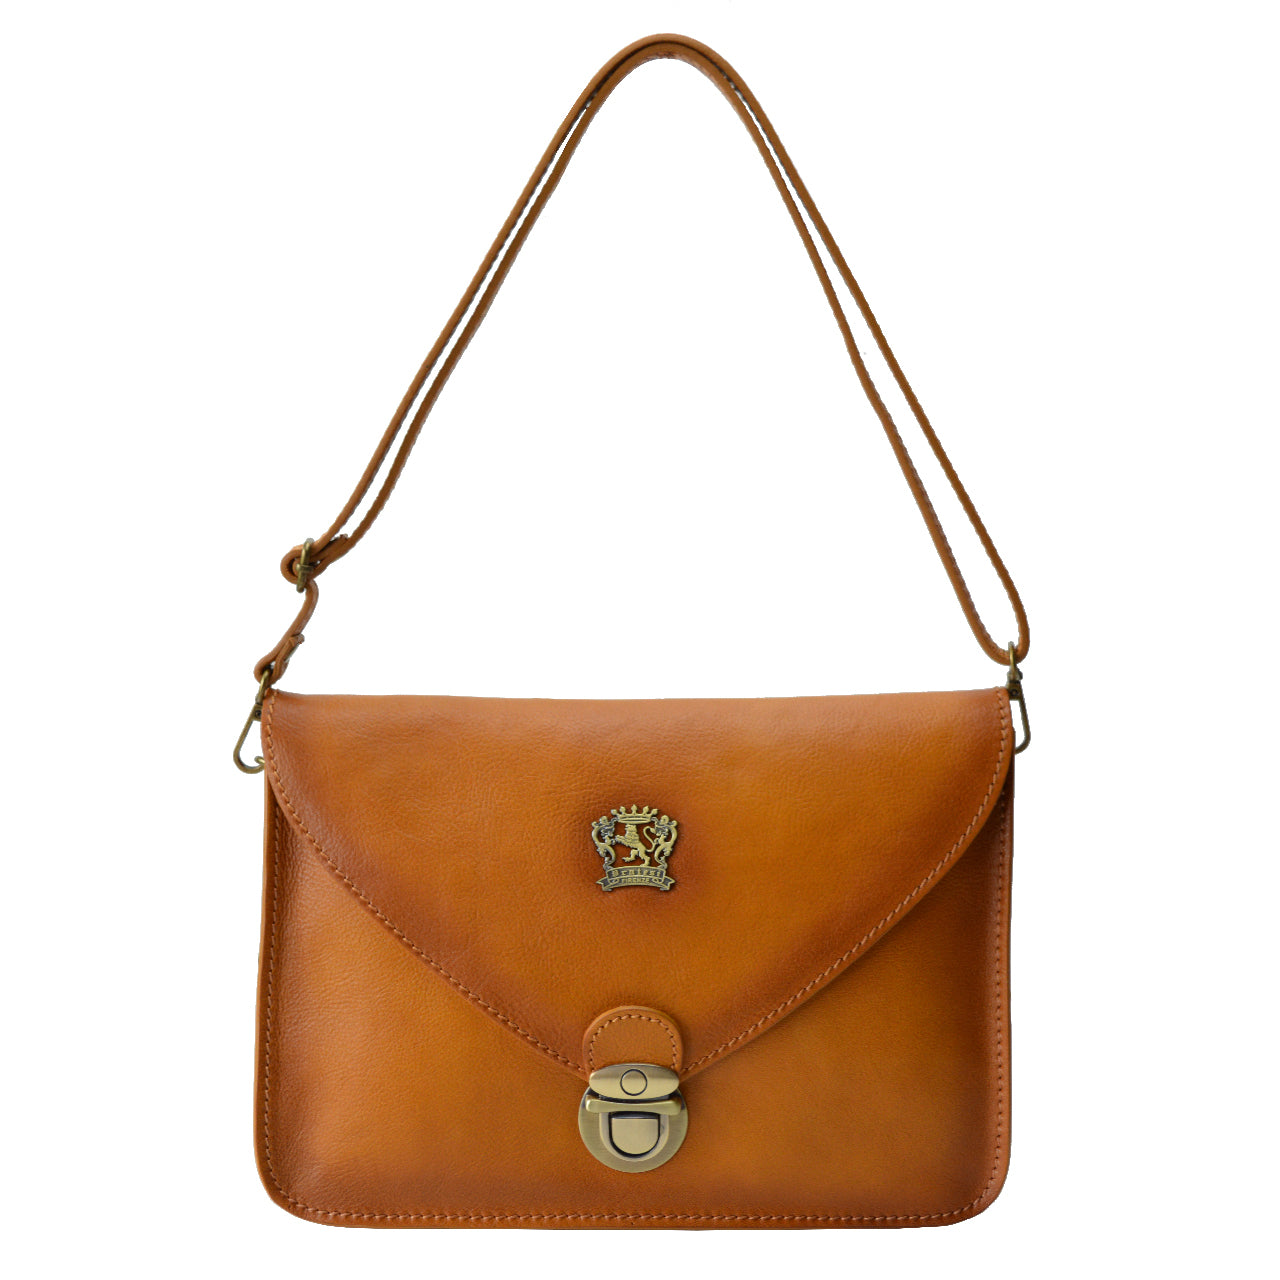 Pratesi Acone Woman Bag in genuine Italian leather